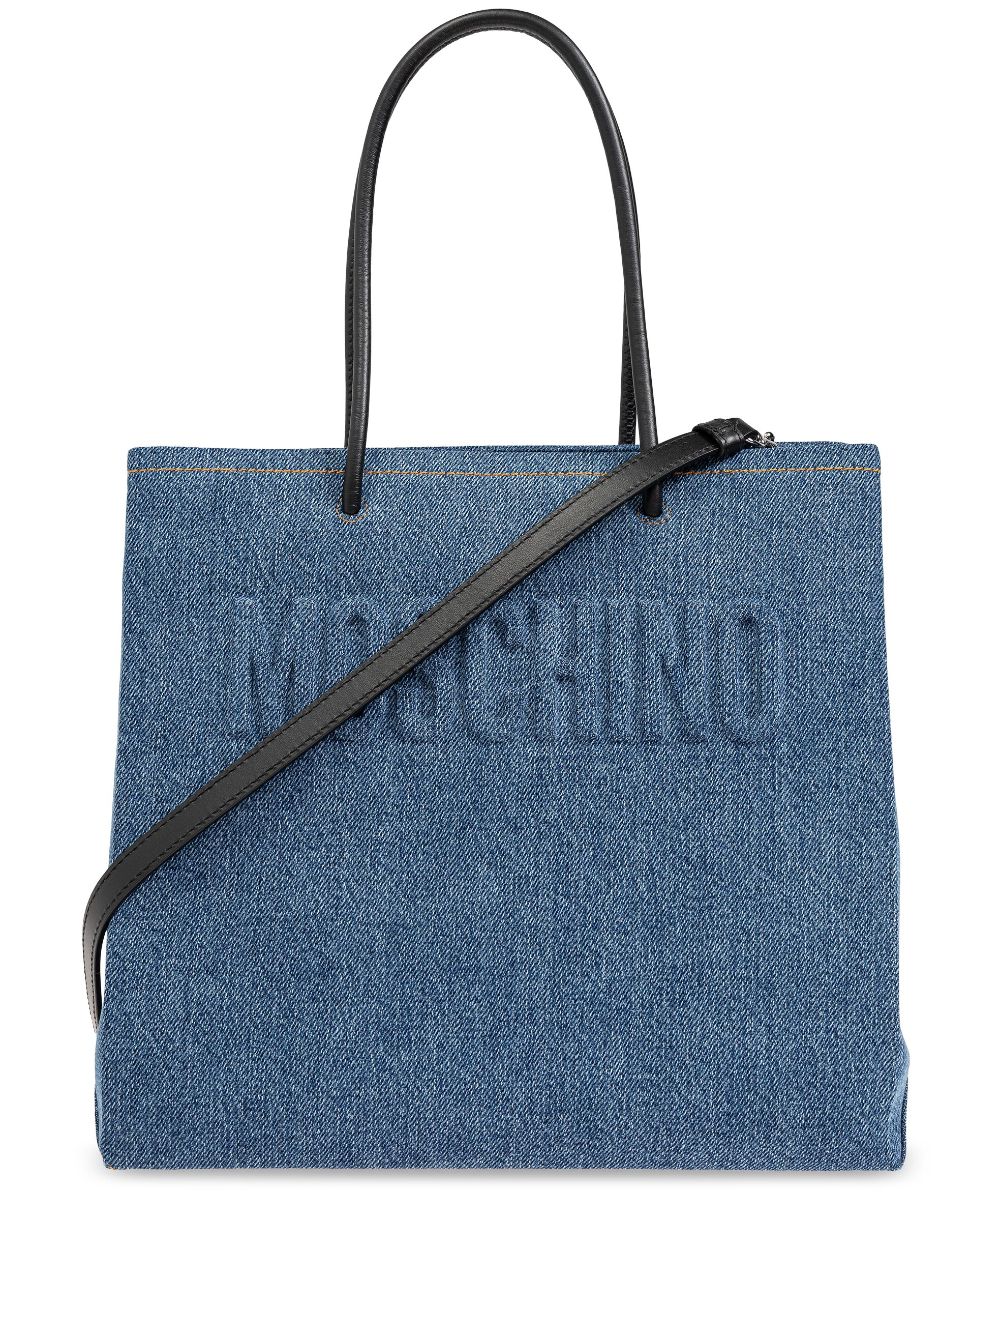 Moschino denim tote bag - Blue von Moschino